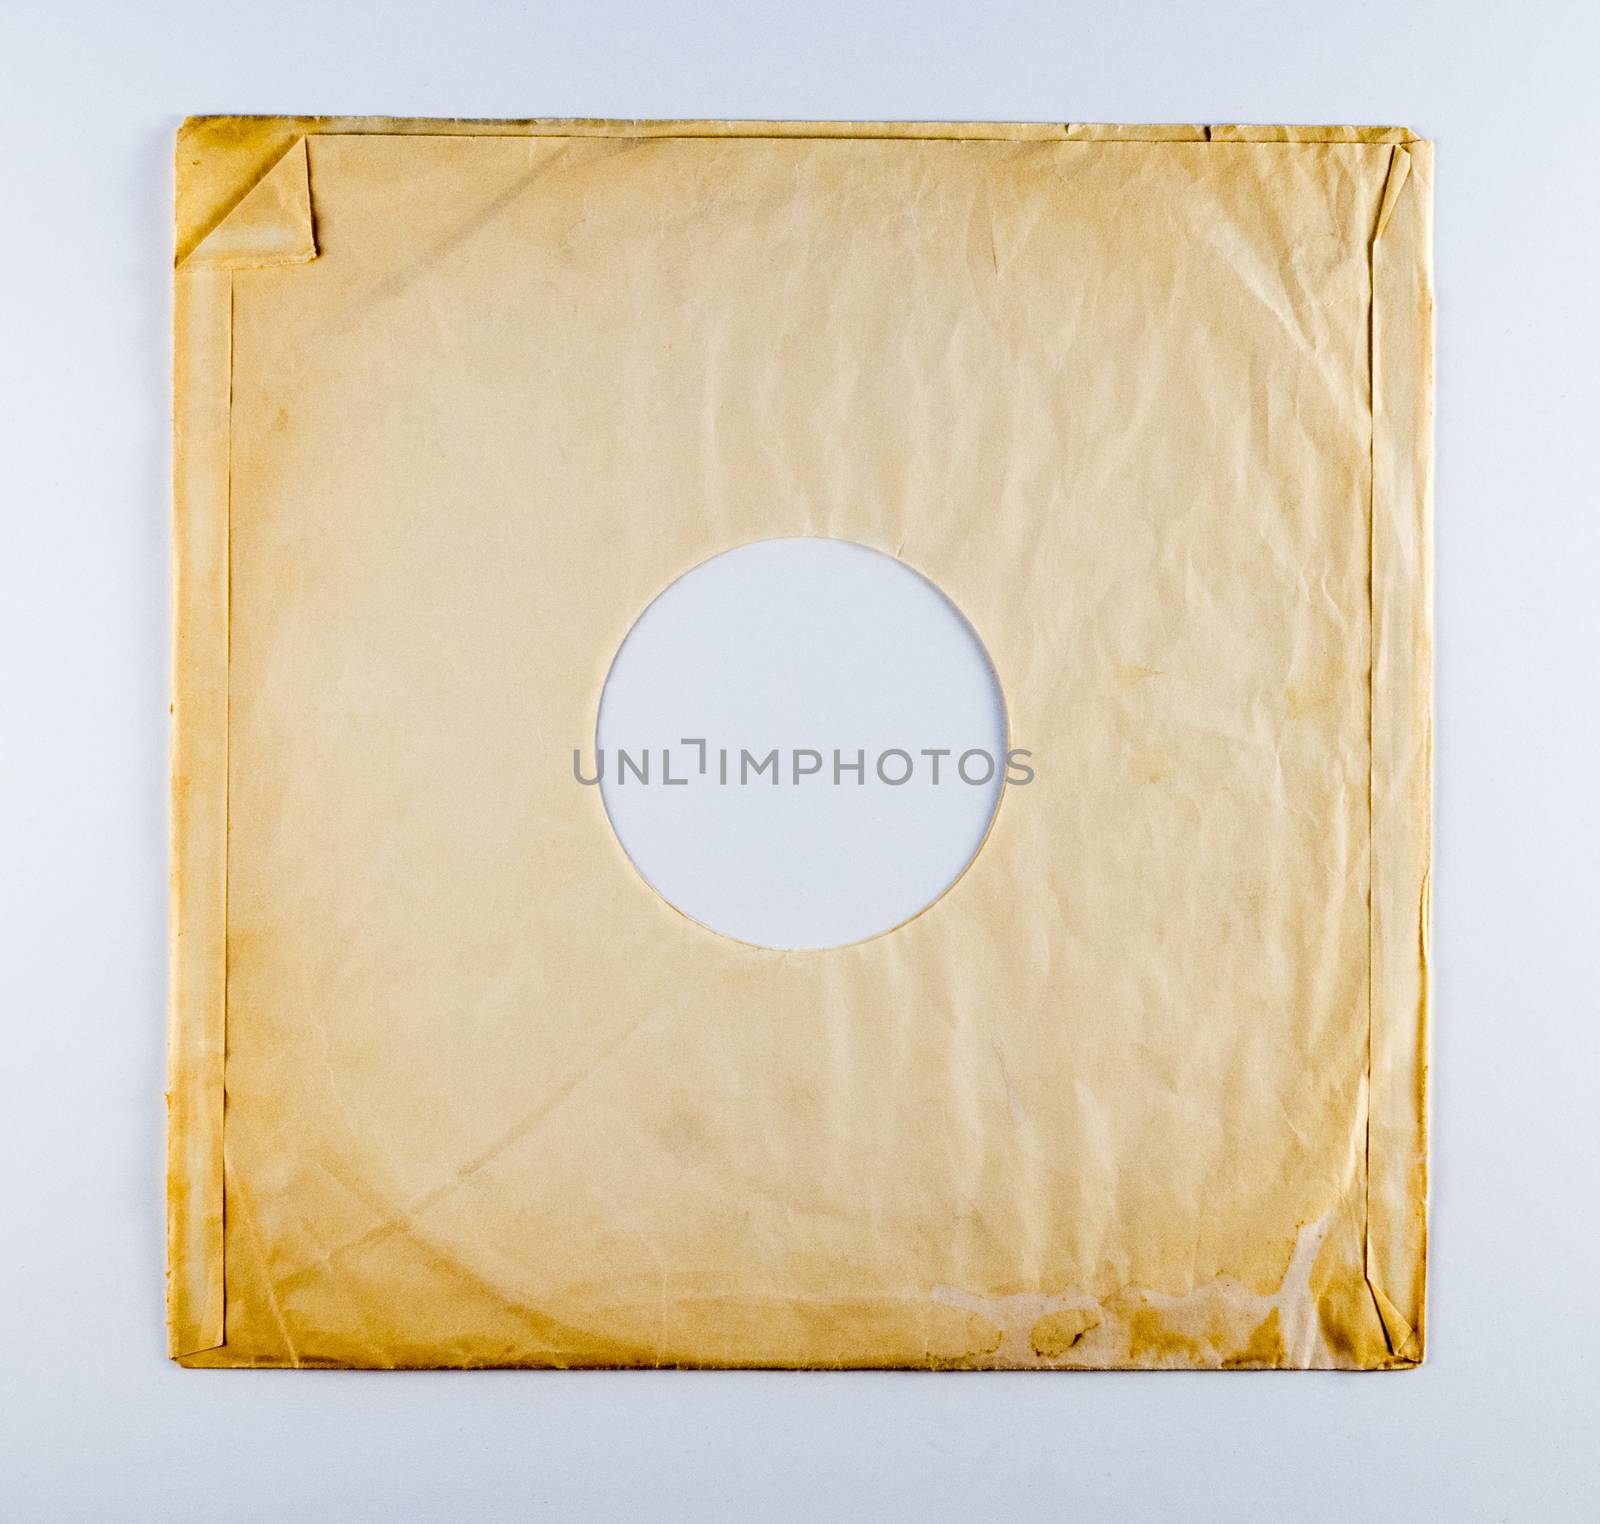 Vintage vinyl album sleeve or jacket on white background